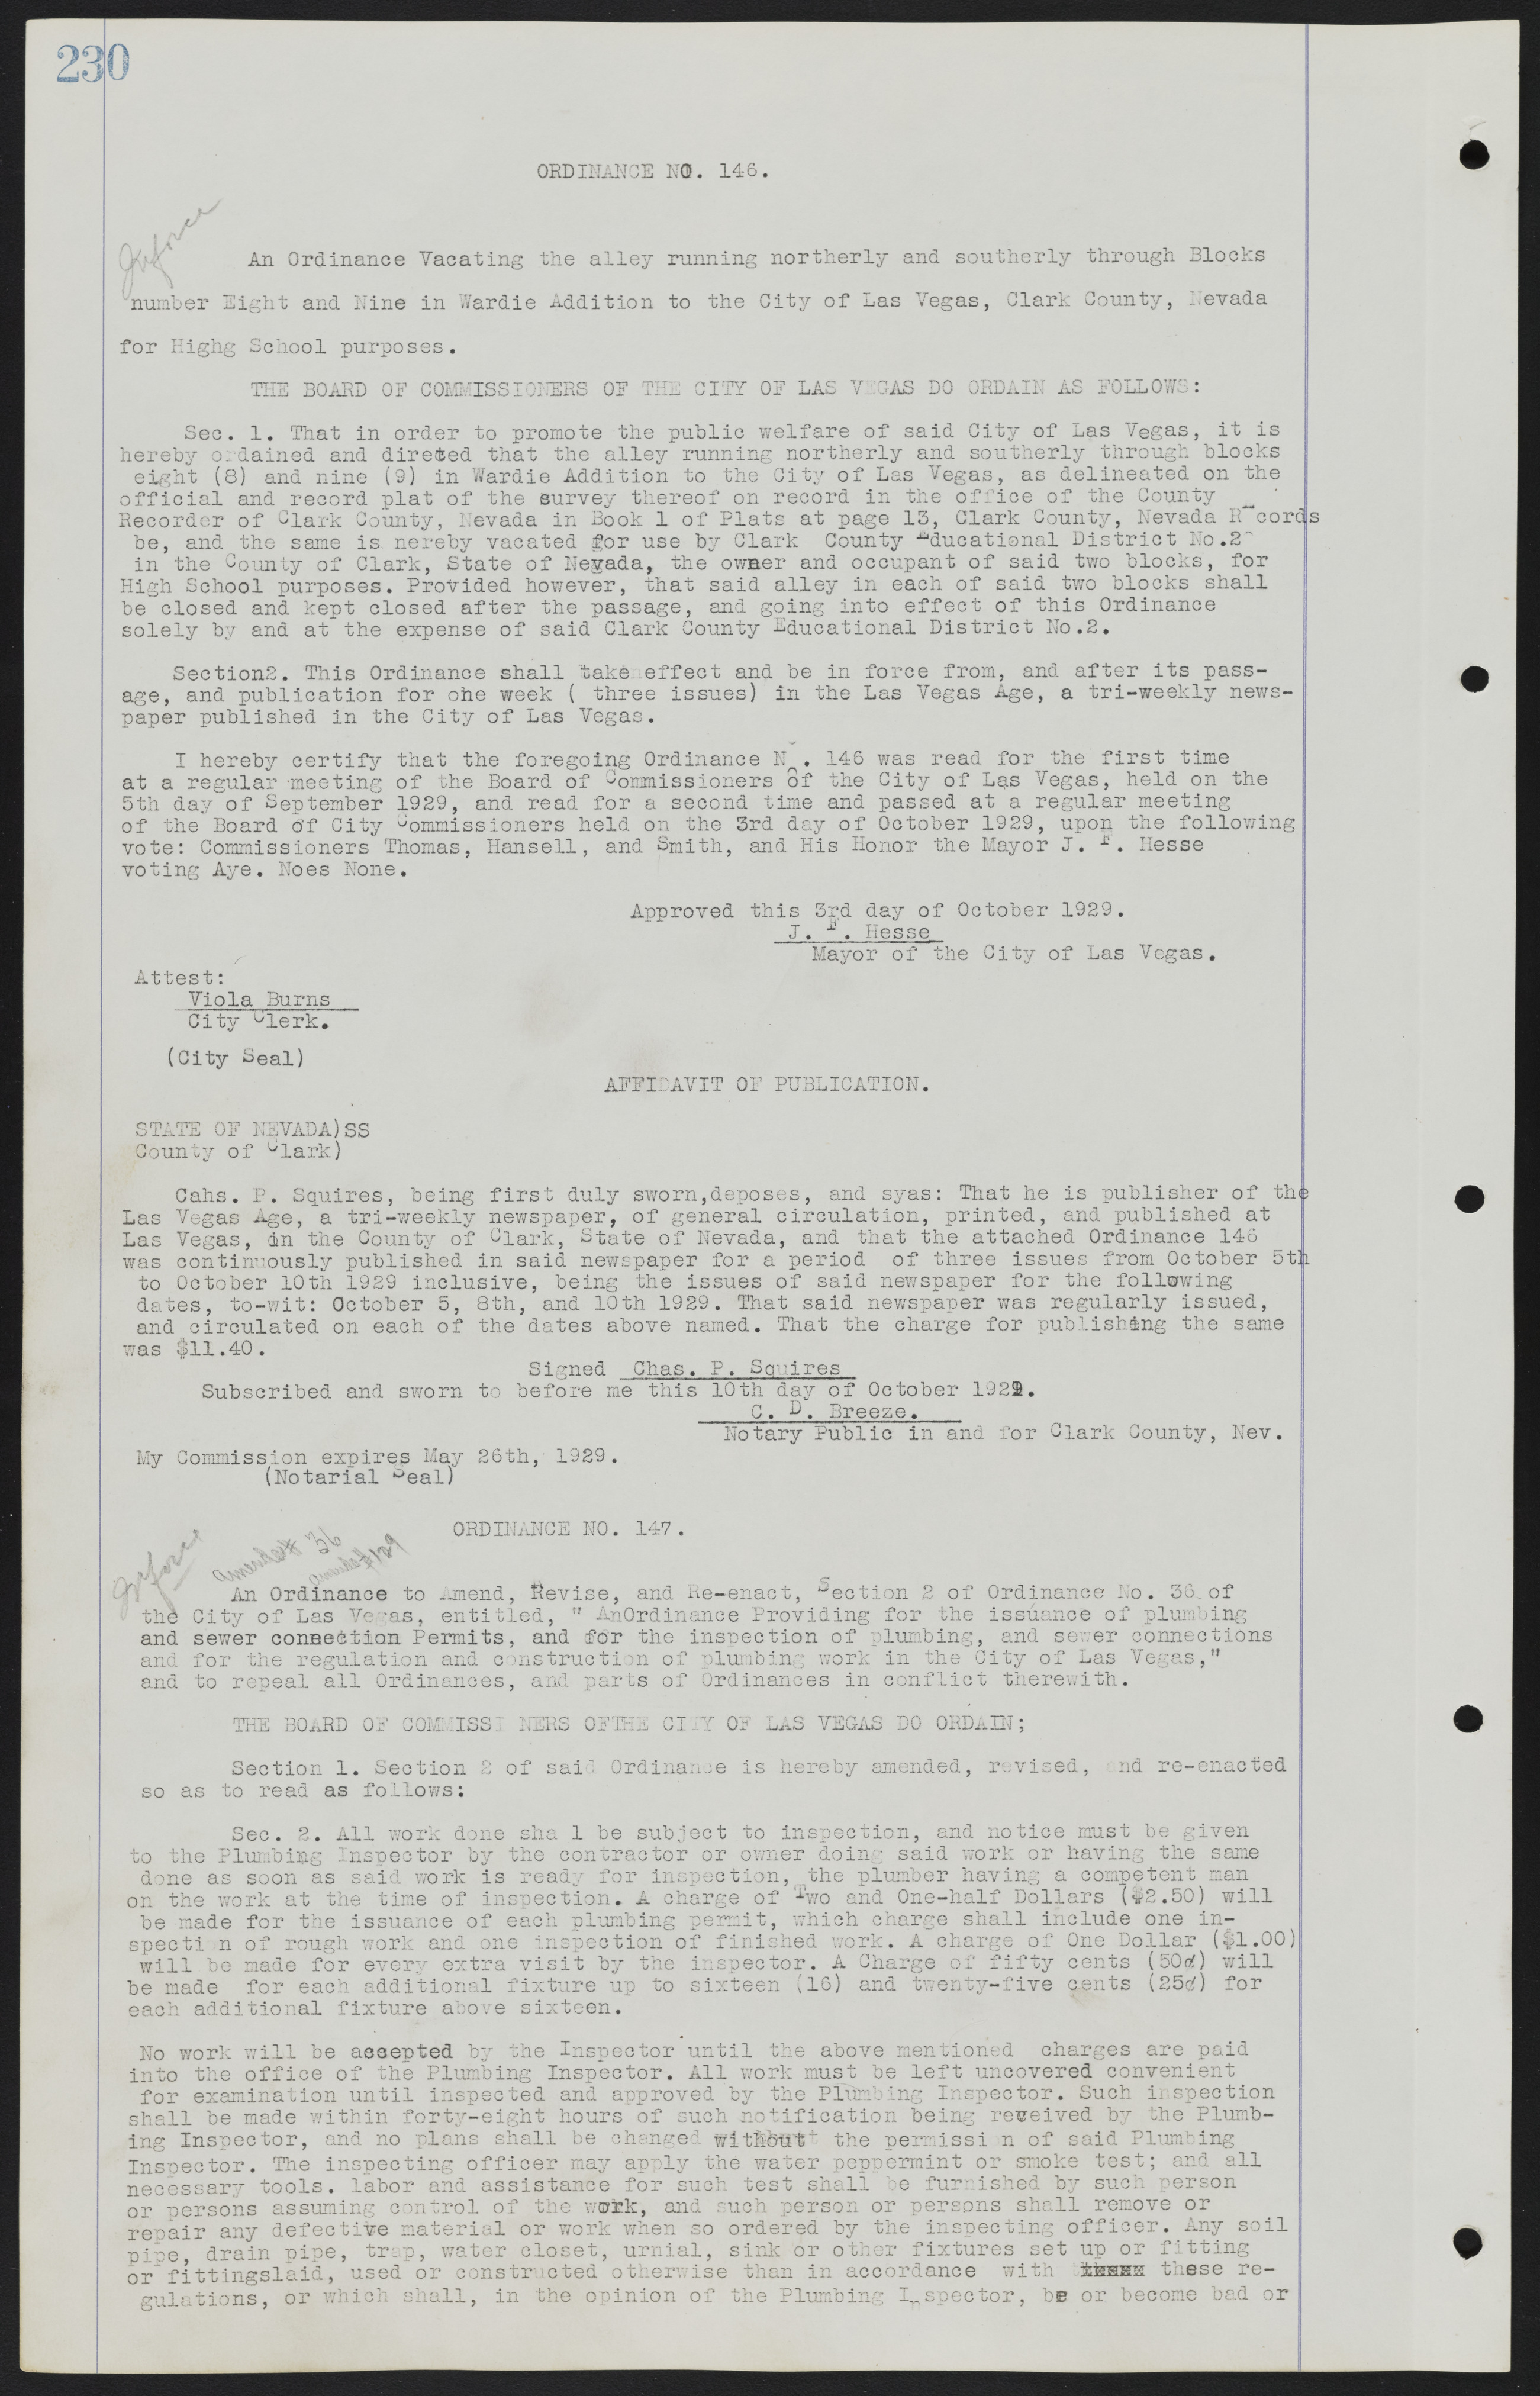 Las Vegas City Ordinances, July 18, 1911 to March 31, 1933, lvc000013-234